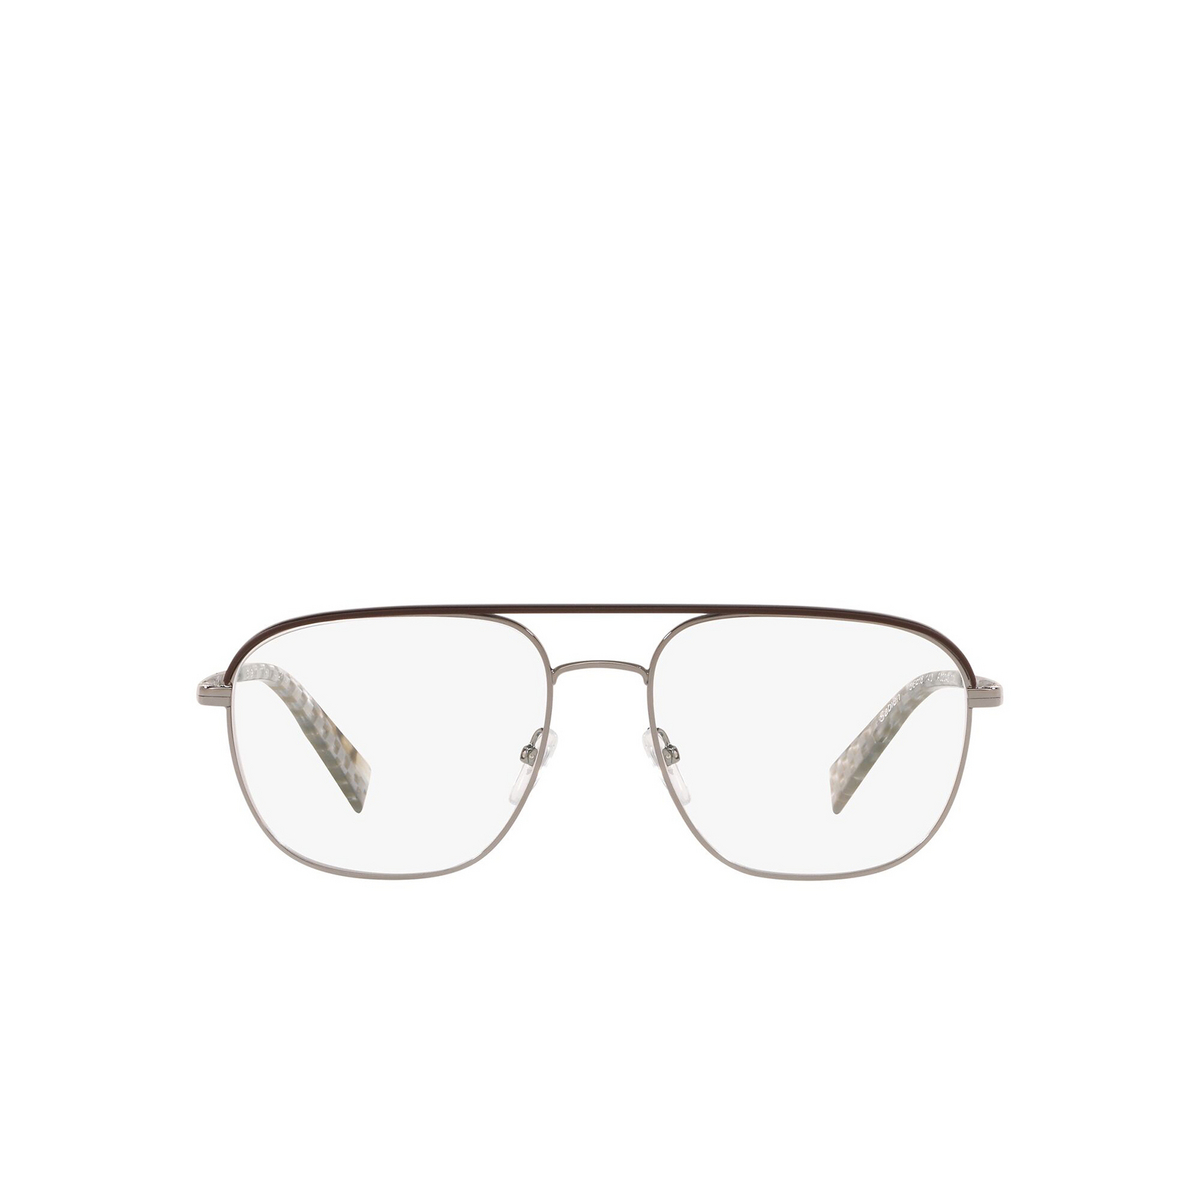 Alain Mikli® Aviator Eyeglasses: A02042 Sabien color 002 Gunmetal / Matte Brown - front view